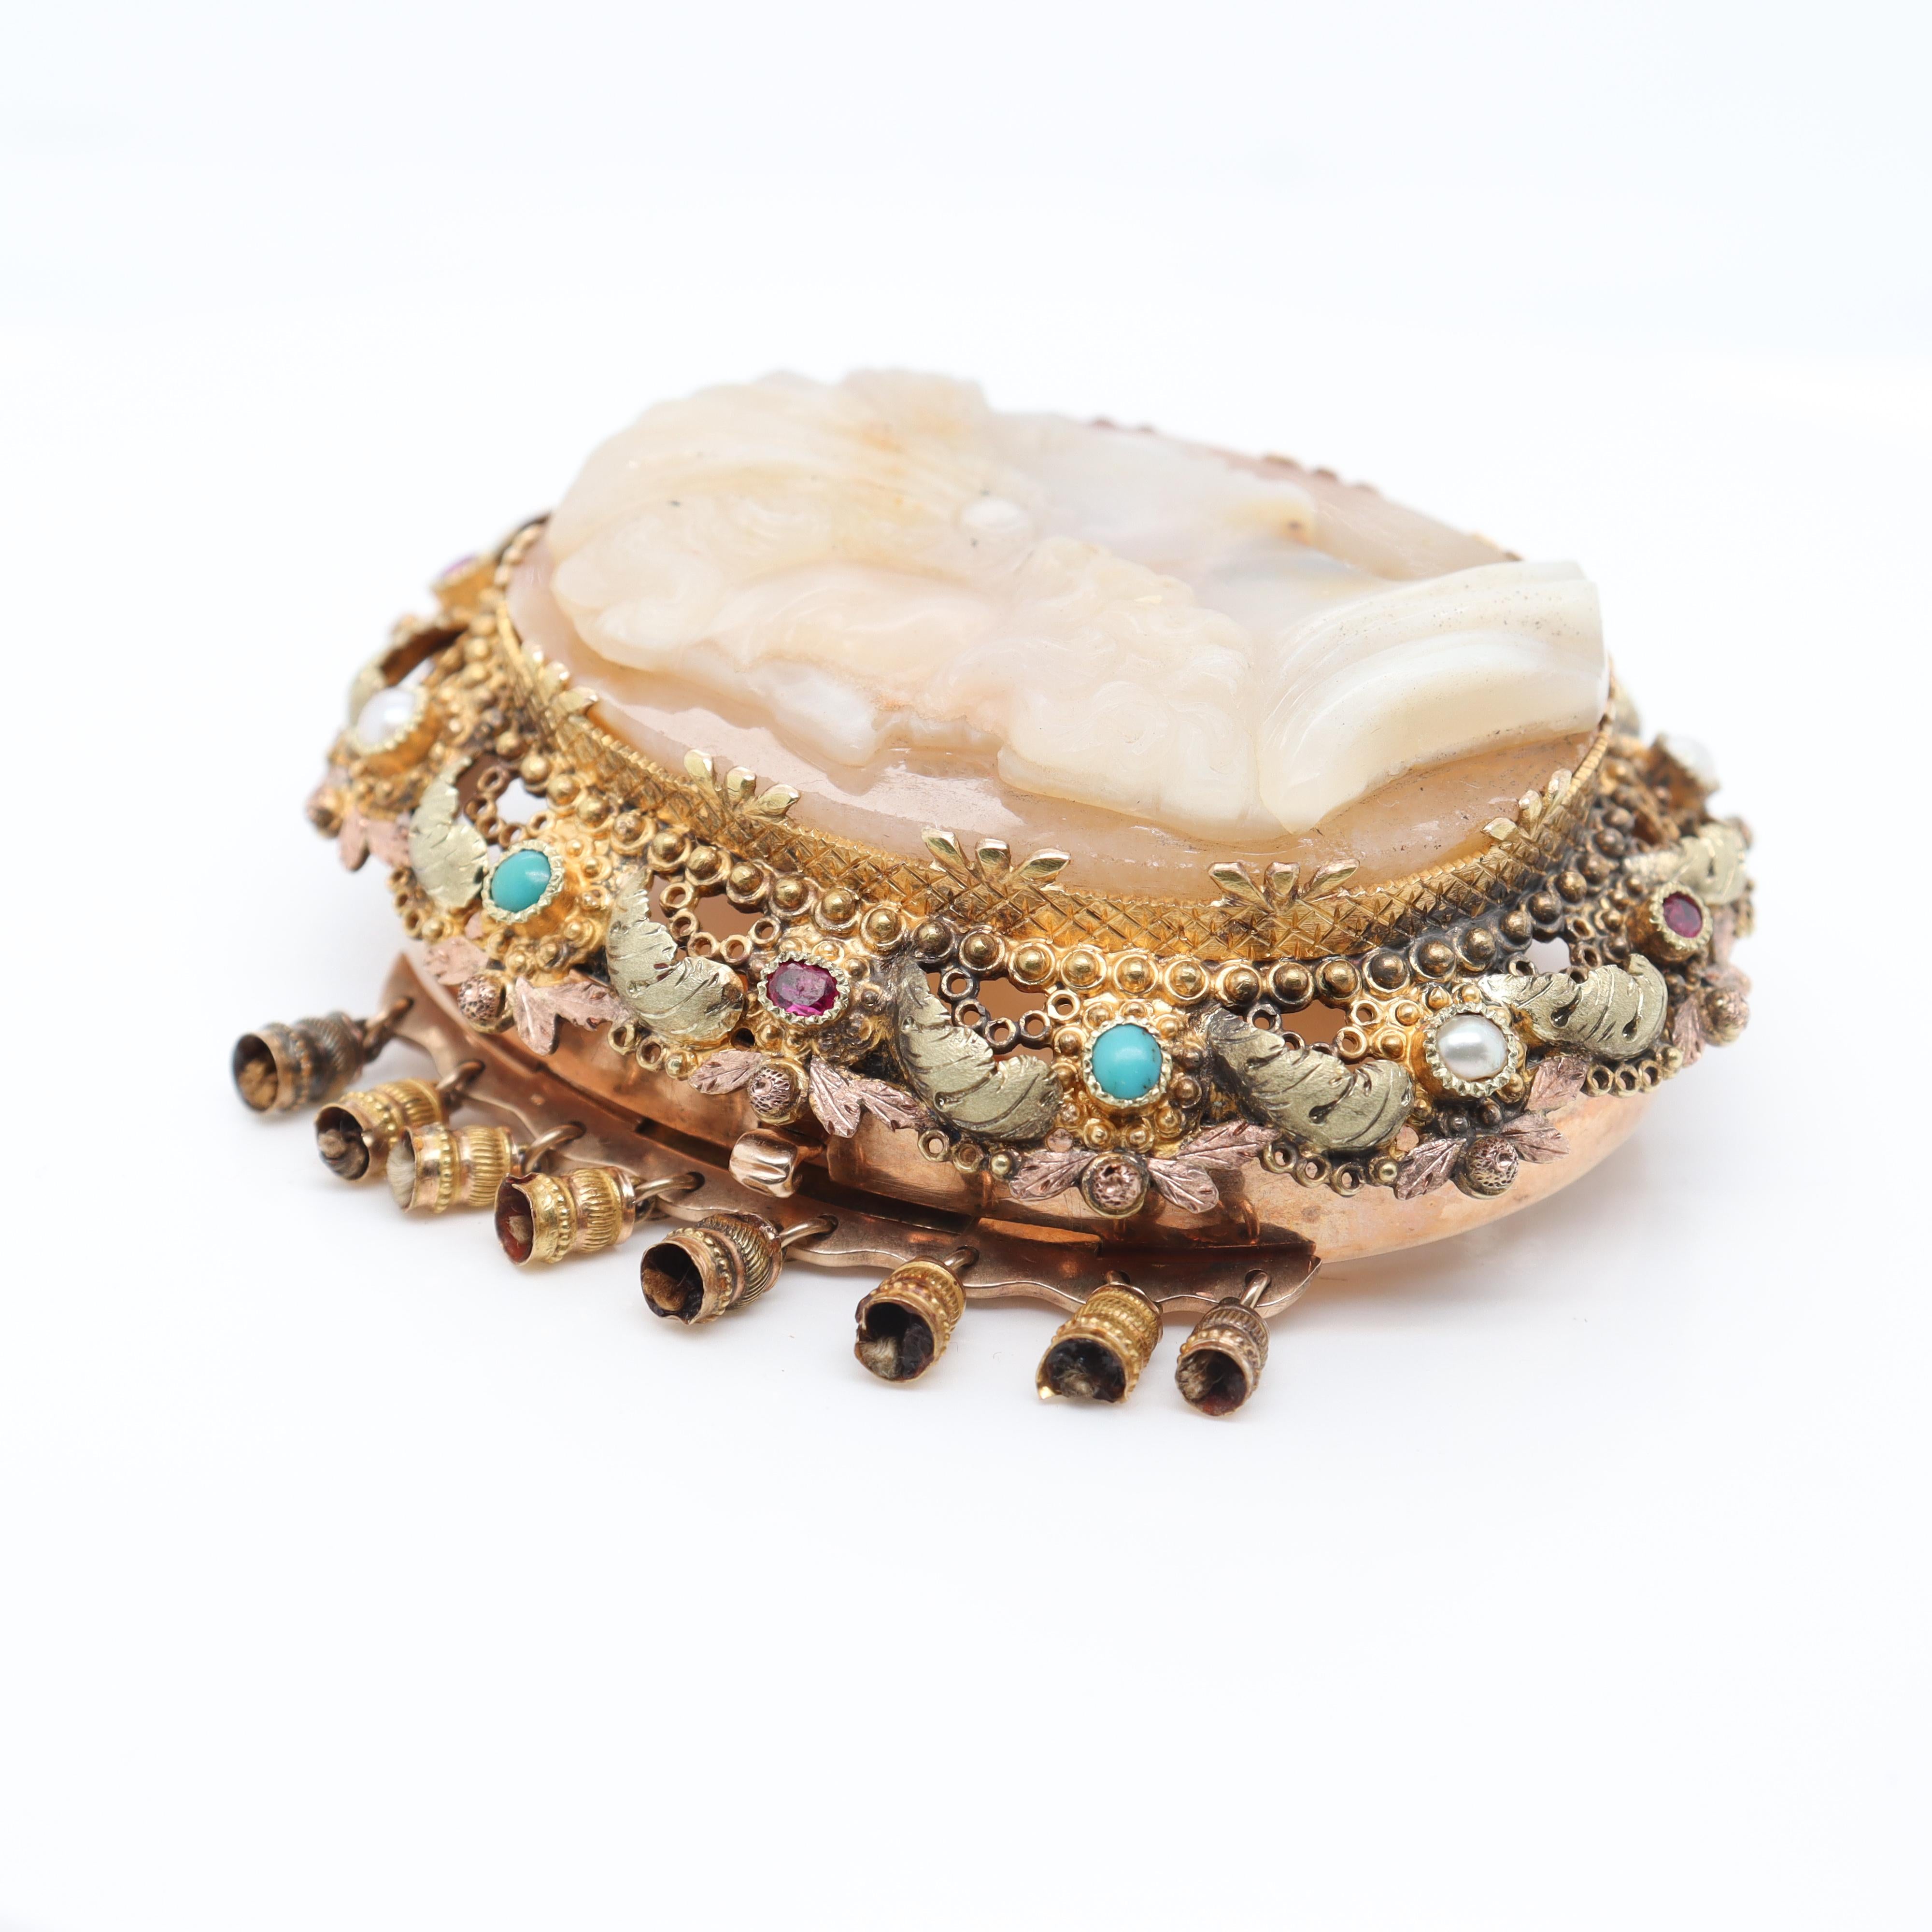 Antique Gold & Carved Agate Cameo Hermaphrodite Bracelet or Necklace Clasp For Sale 5